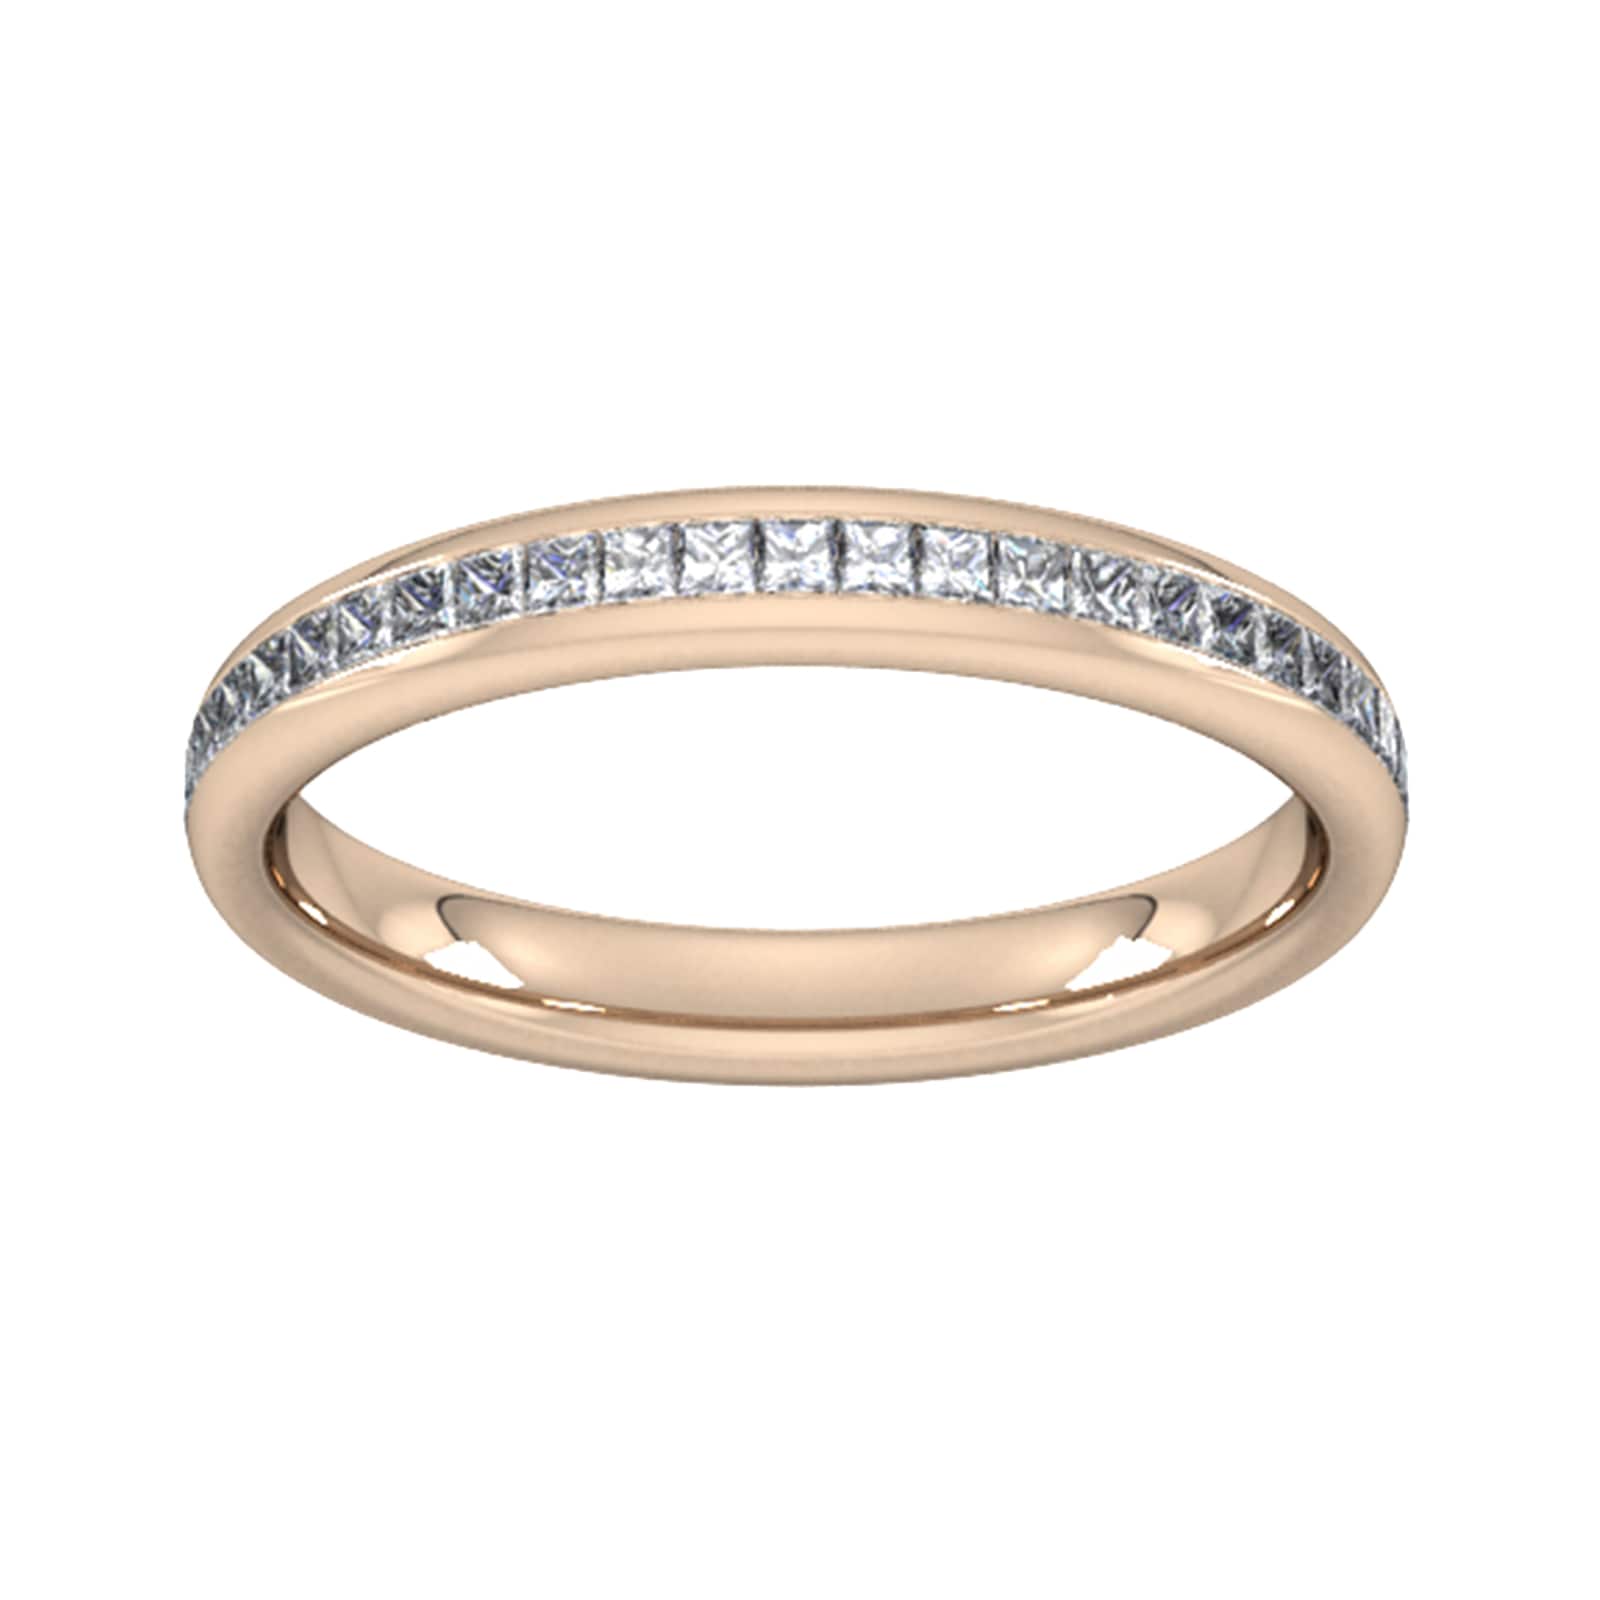 0.34 Carat Total Weight Princess Cut Channel Set Wedding Ring In 9 Carat Rose Gold - Ring Size G